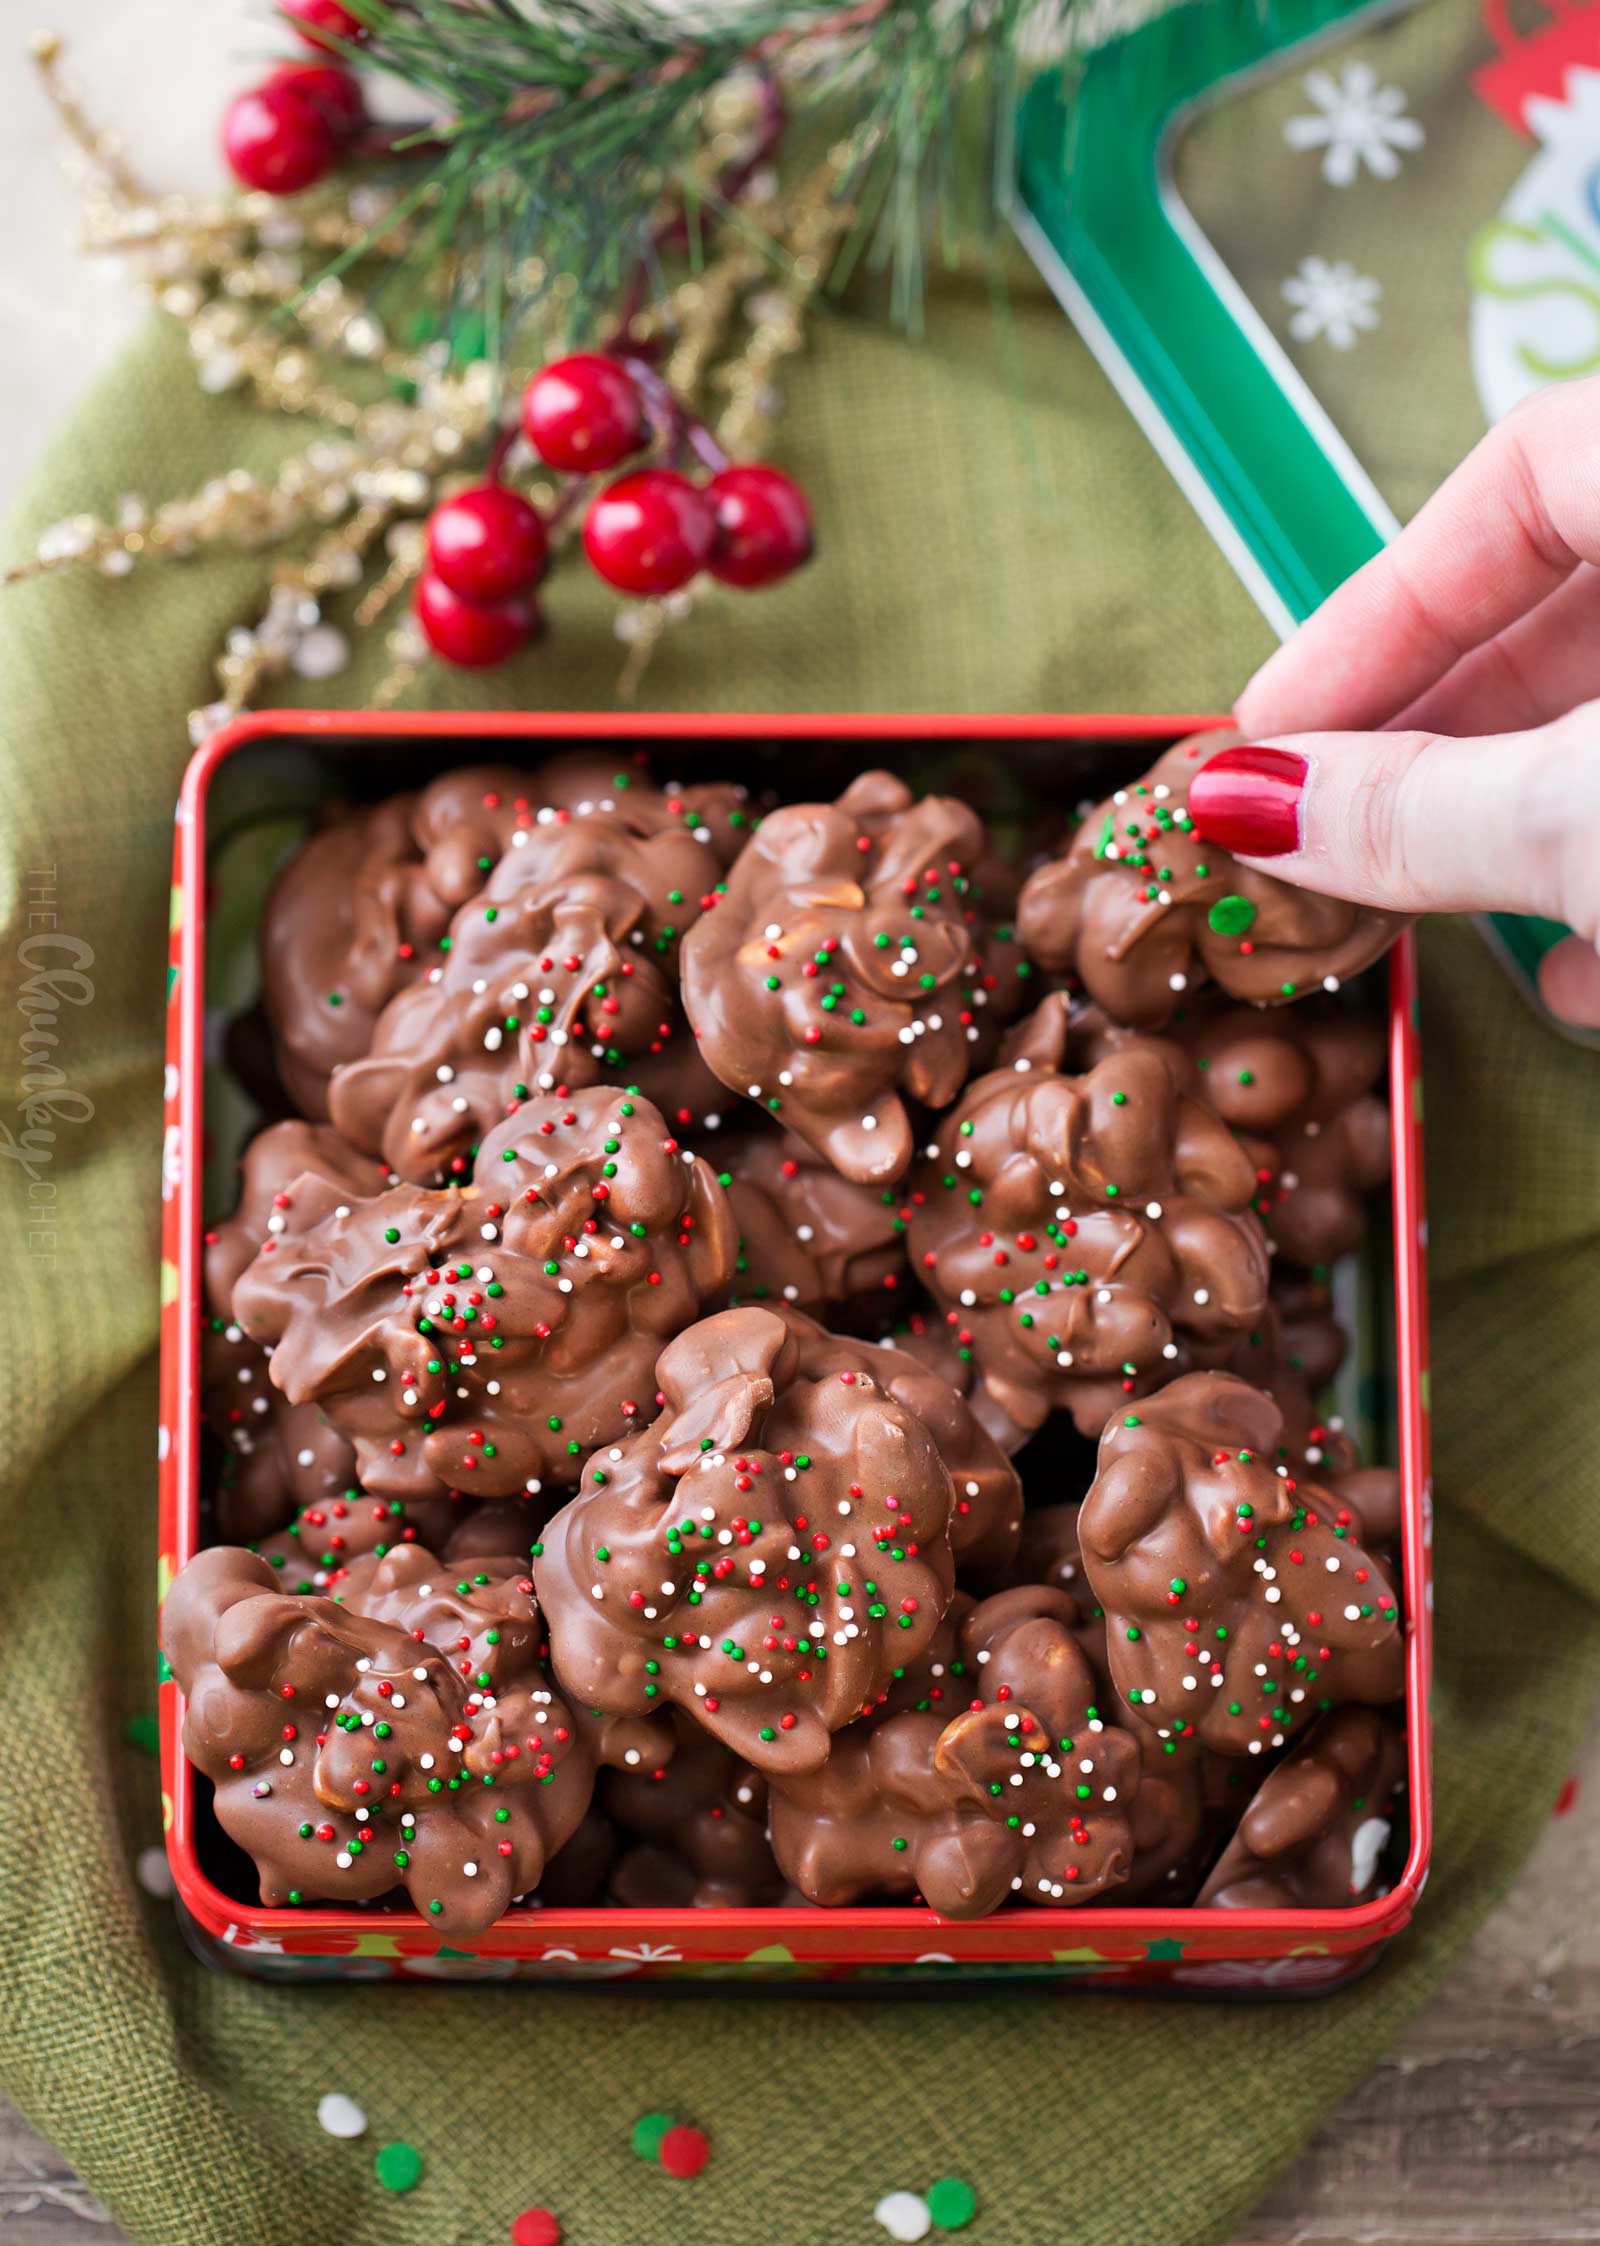 Easy Christmas Crockpot Candy - The Chunky Chef